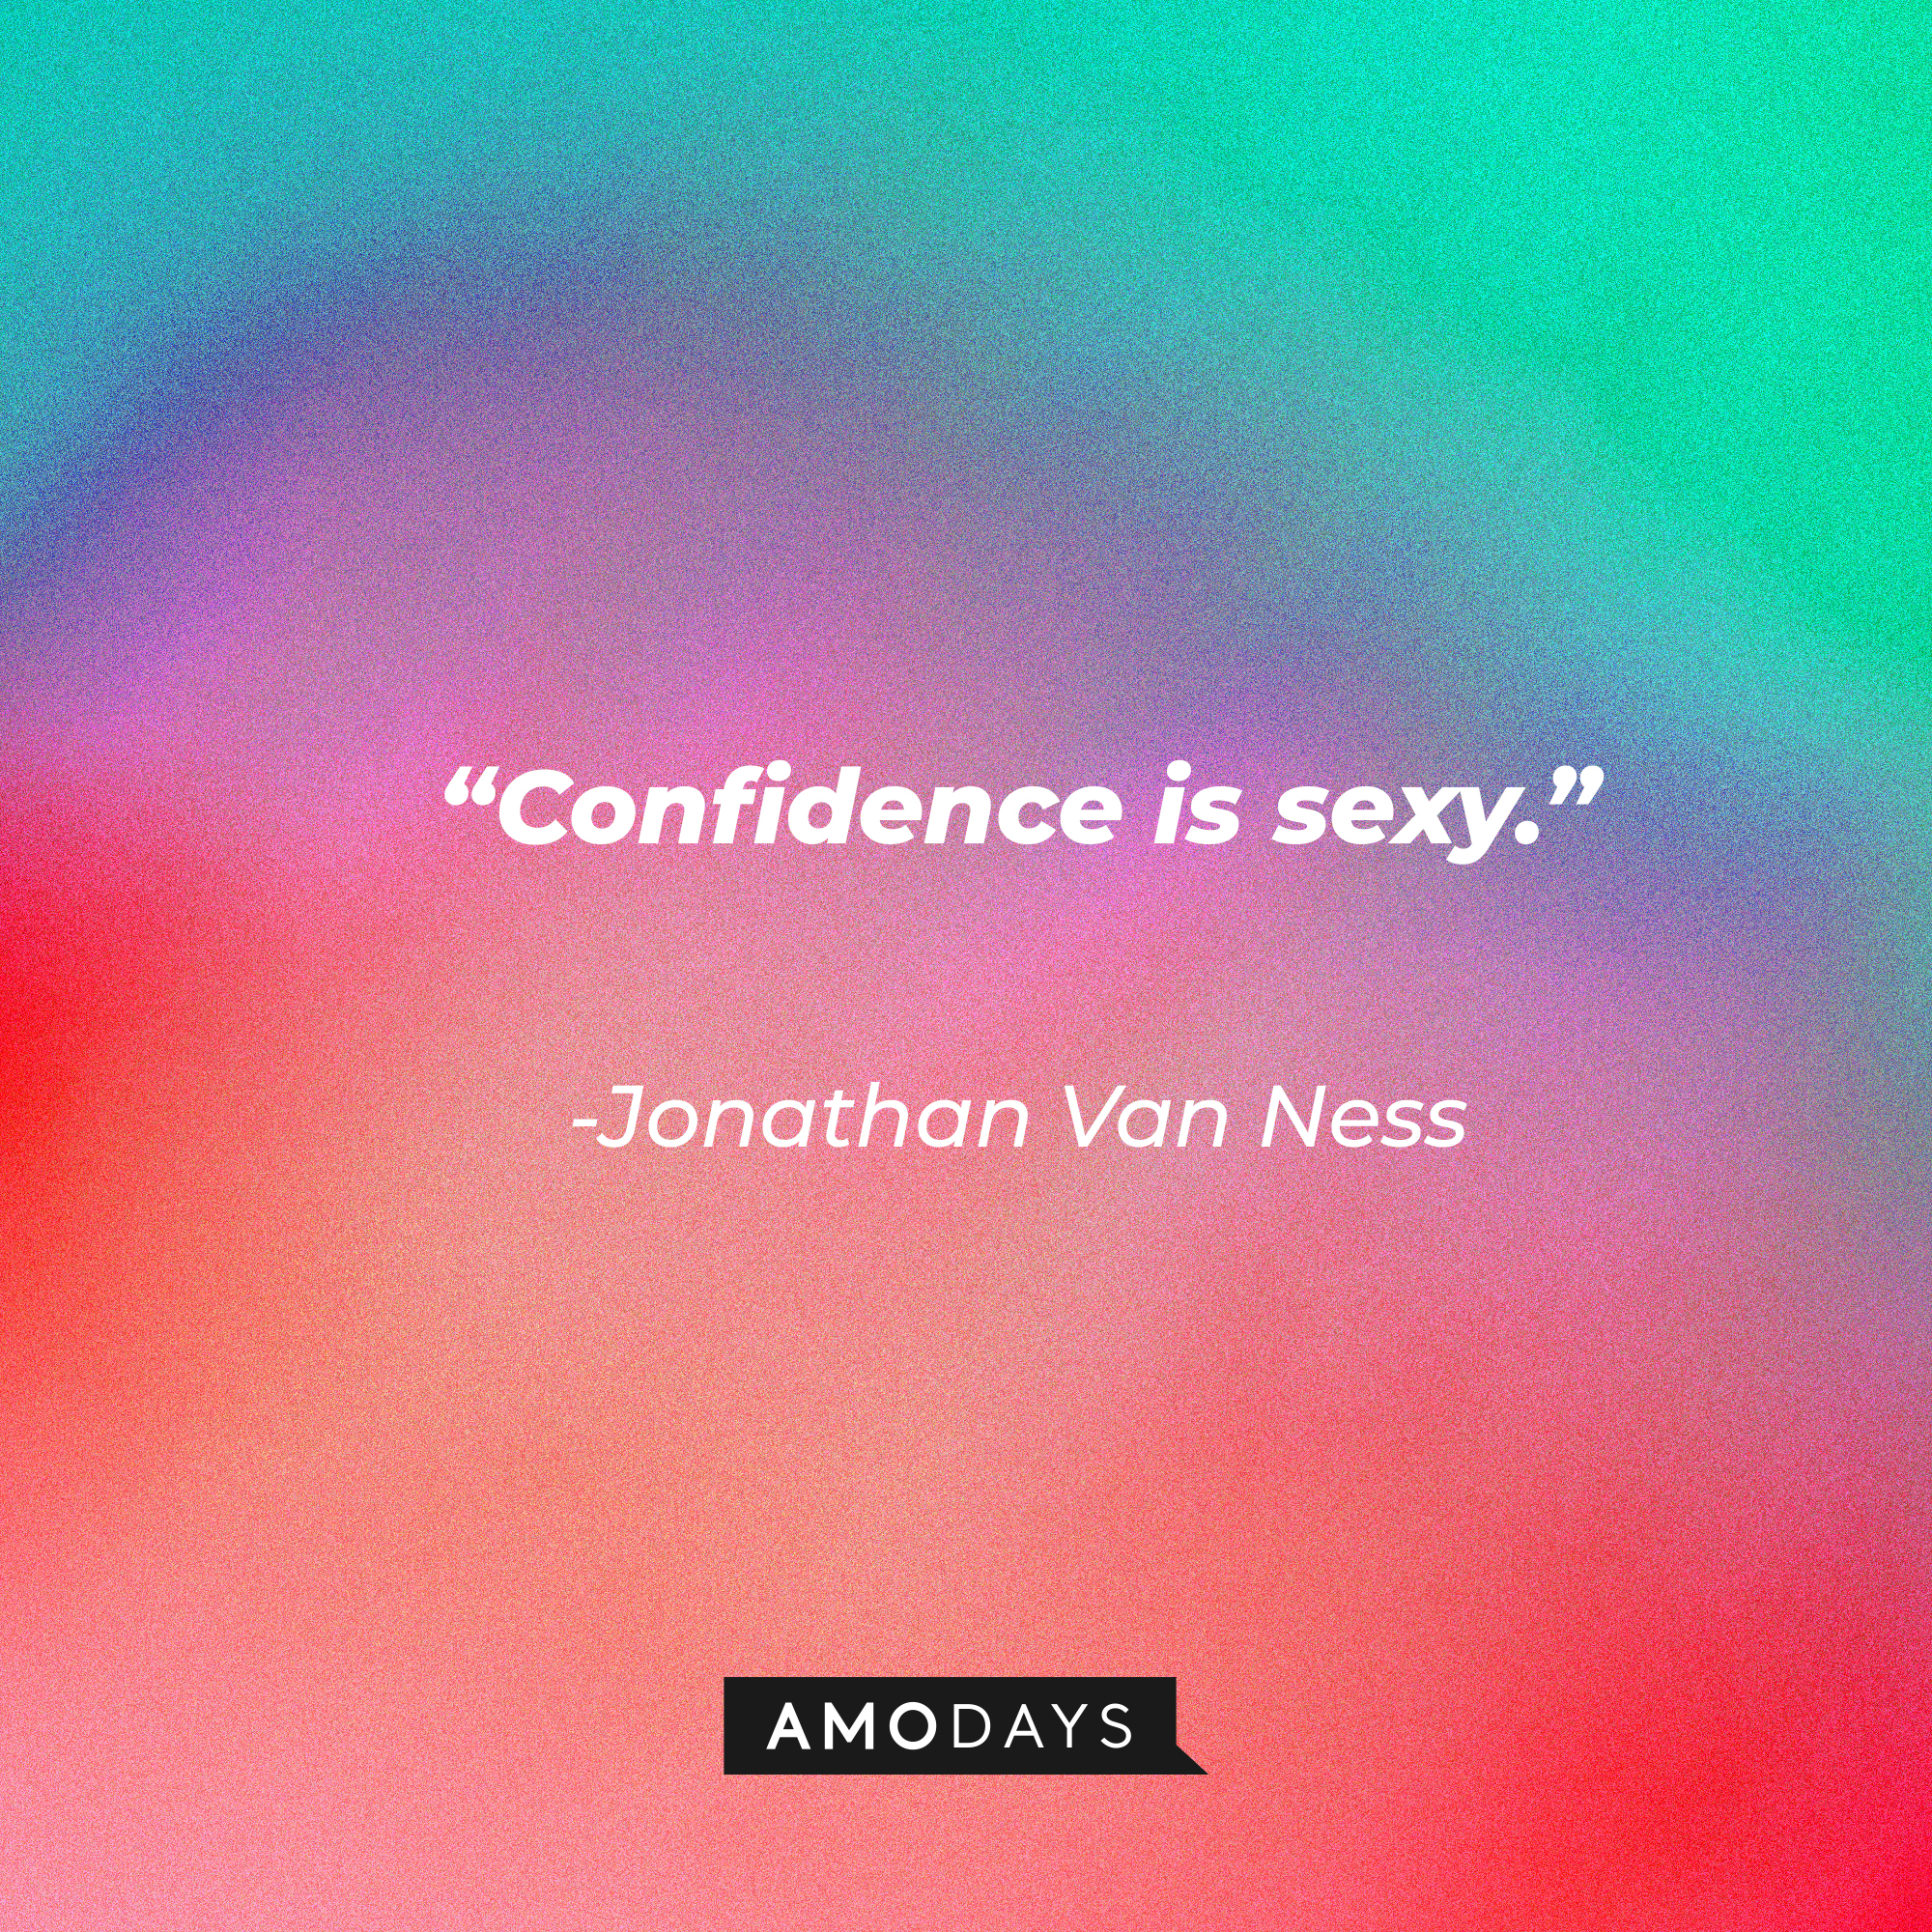 Jonathan Van Ness’s quote: “Confidence is sexy.” | Source: AmoDays